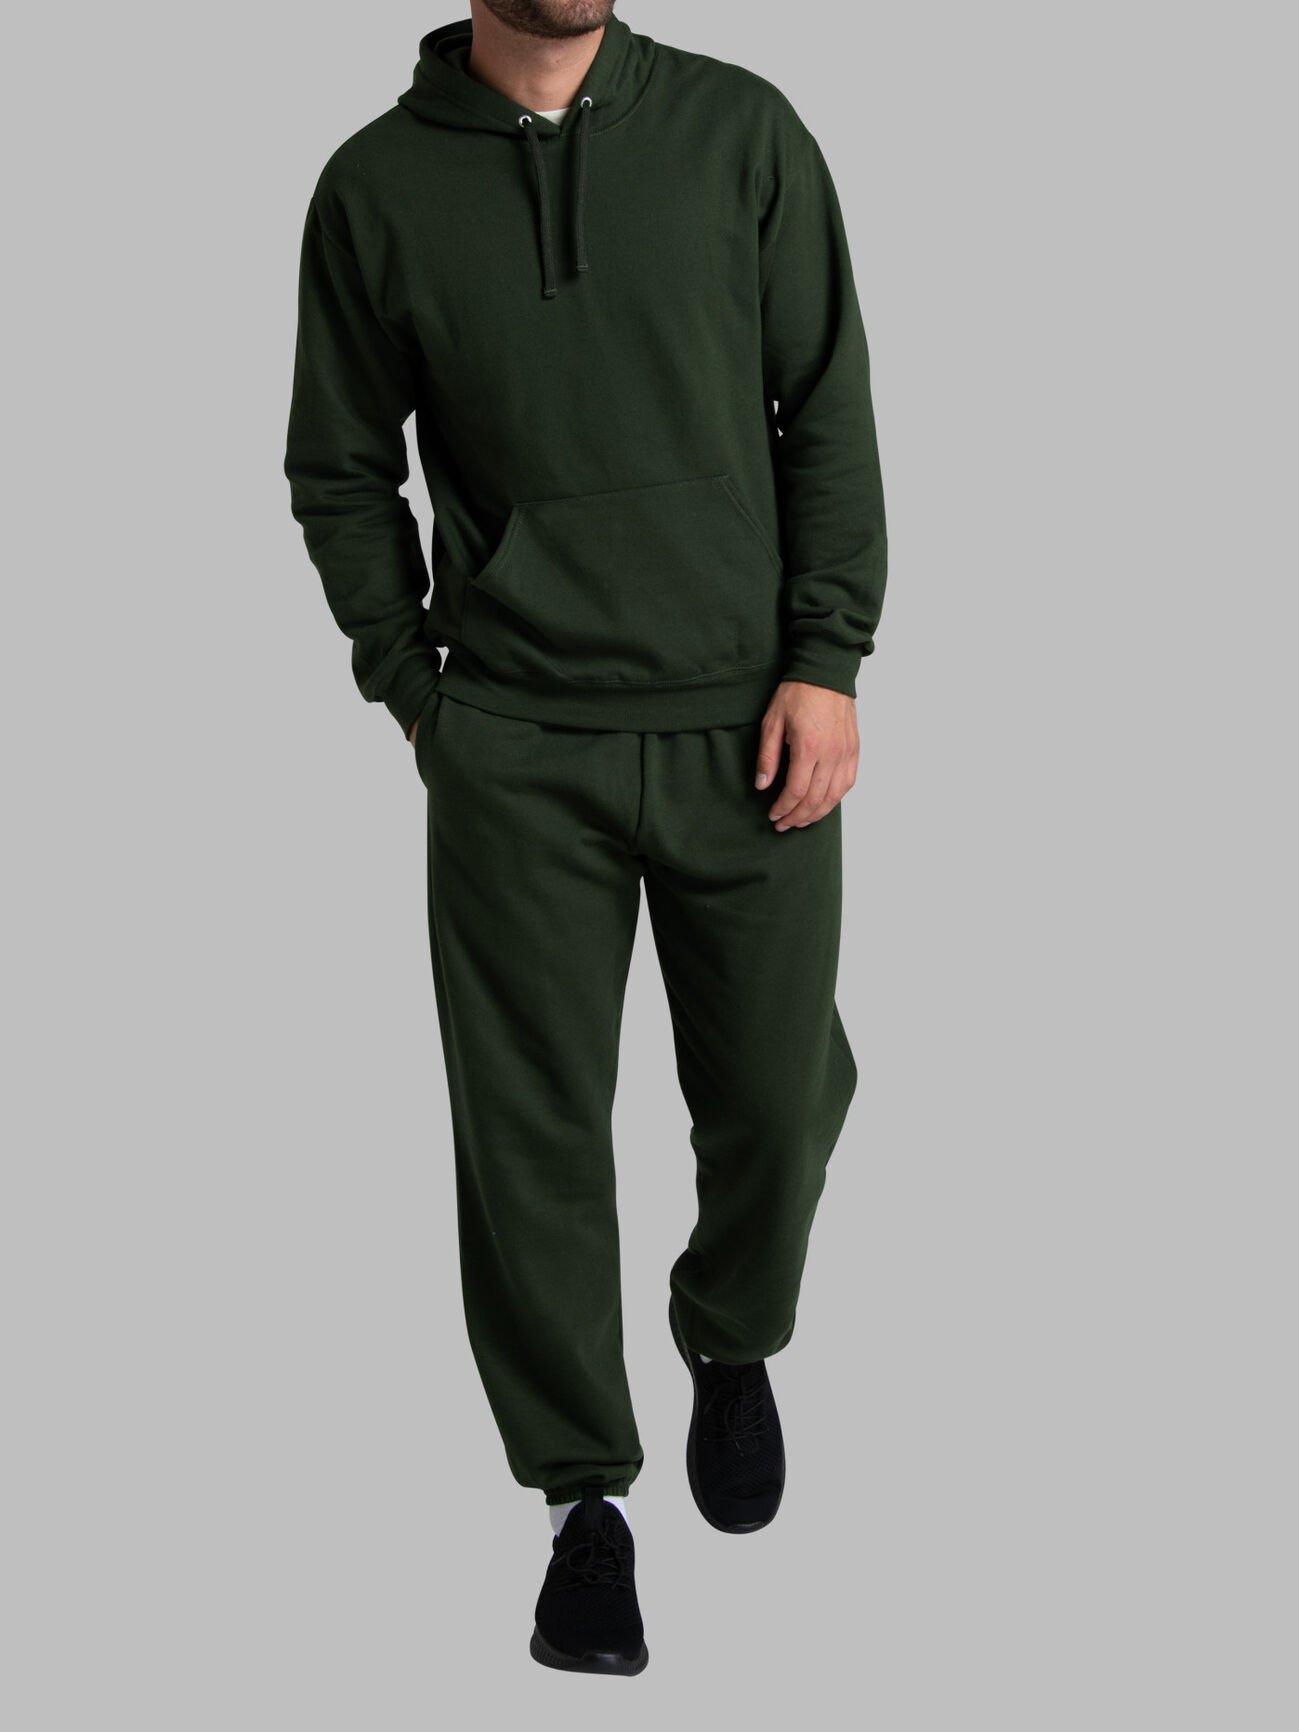 EverSoft®  Fleece Elastic Bottom Sweatpants, Extended Sizes Duffle Bag Green